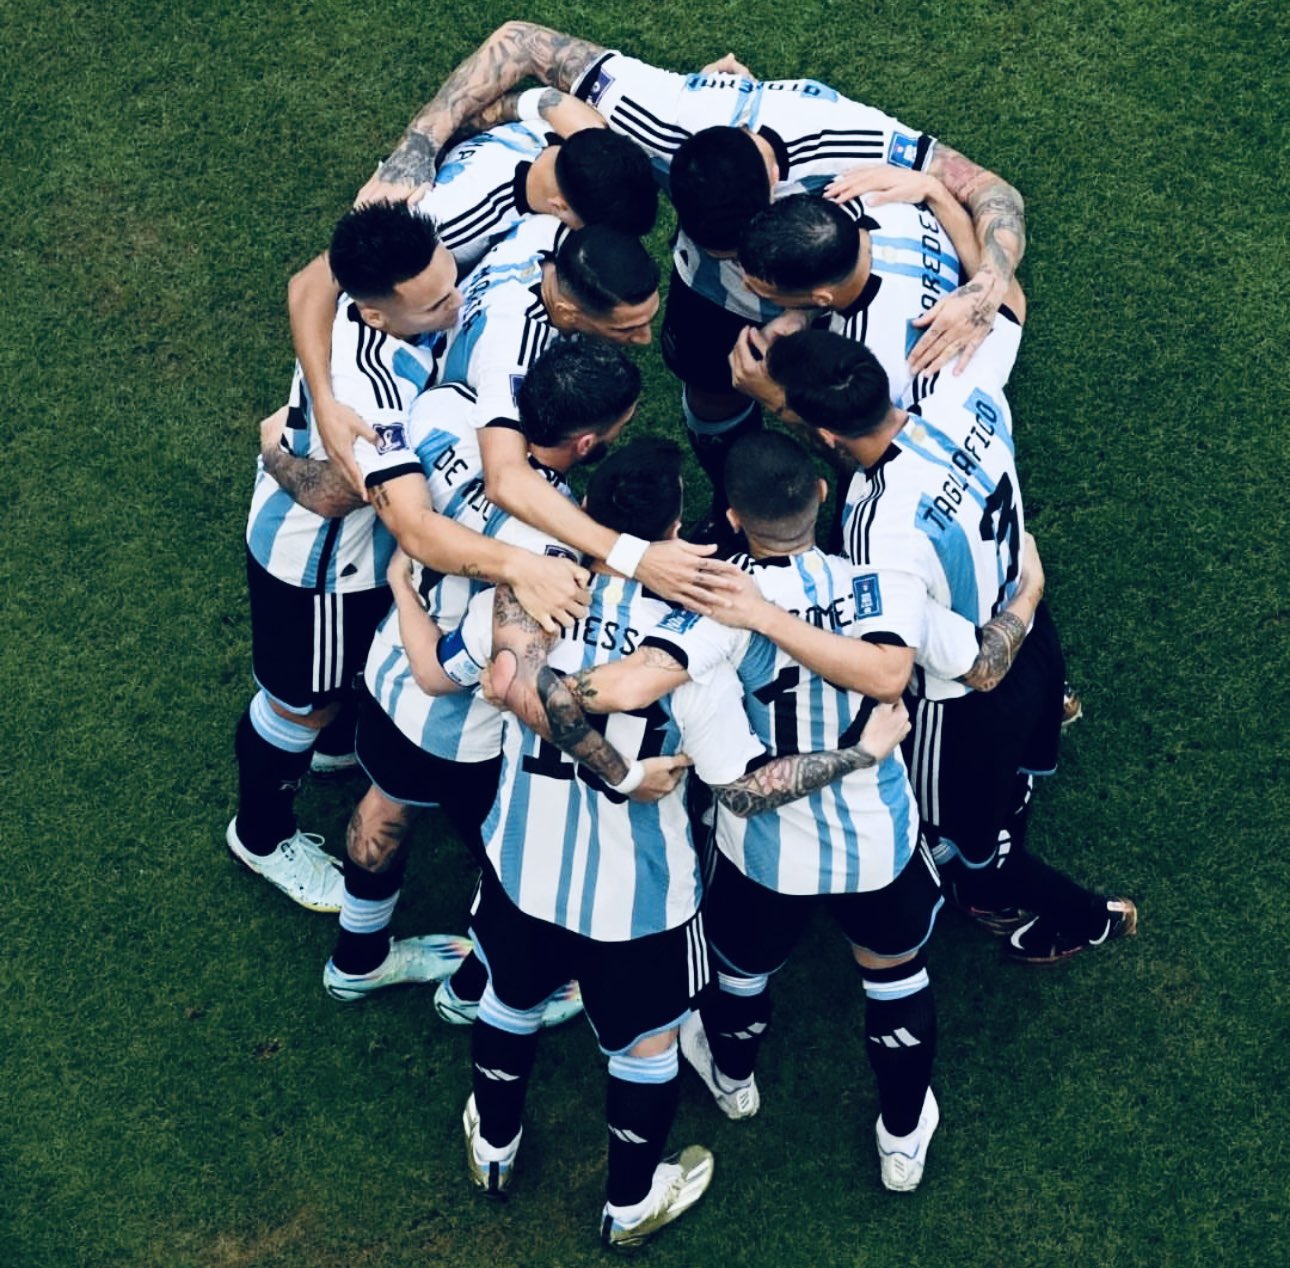 Vamos, vamos, Argentina. Esa Copa linda y deseada - Página 6 FigmuQ7WQAYMrVZ?format=jpg&name=large